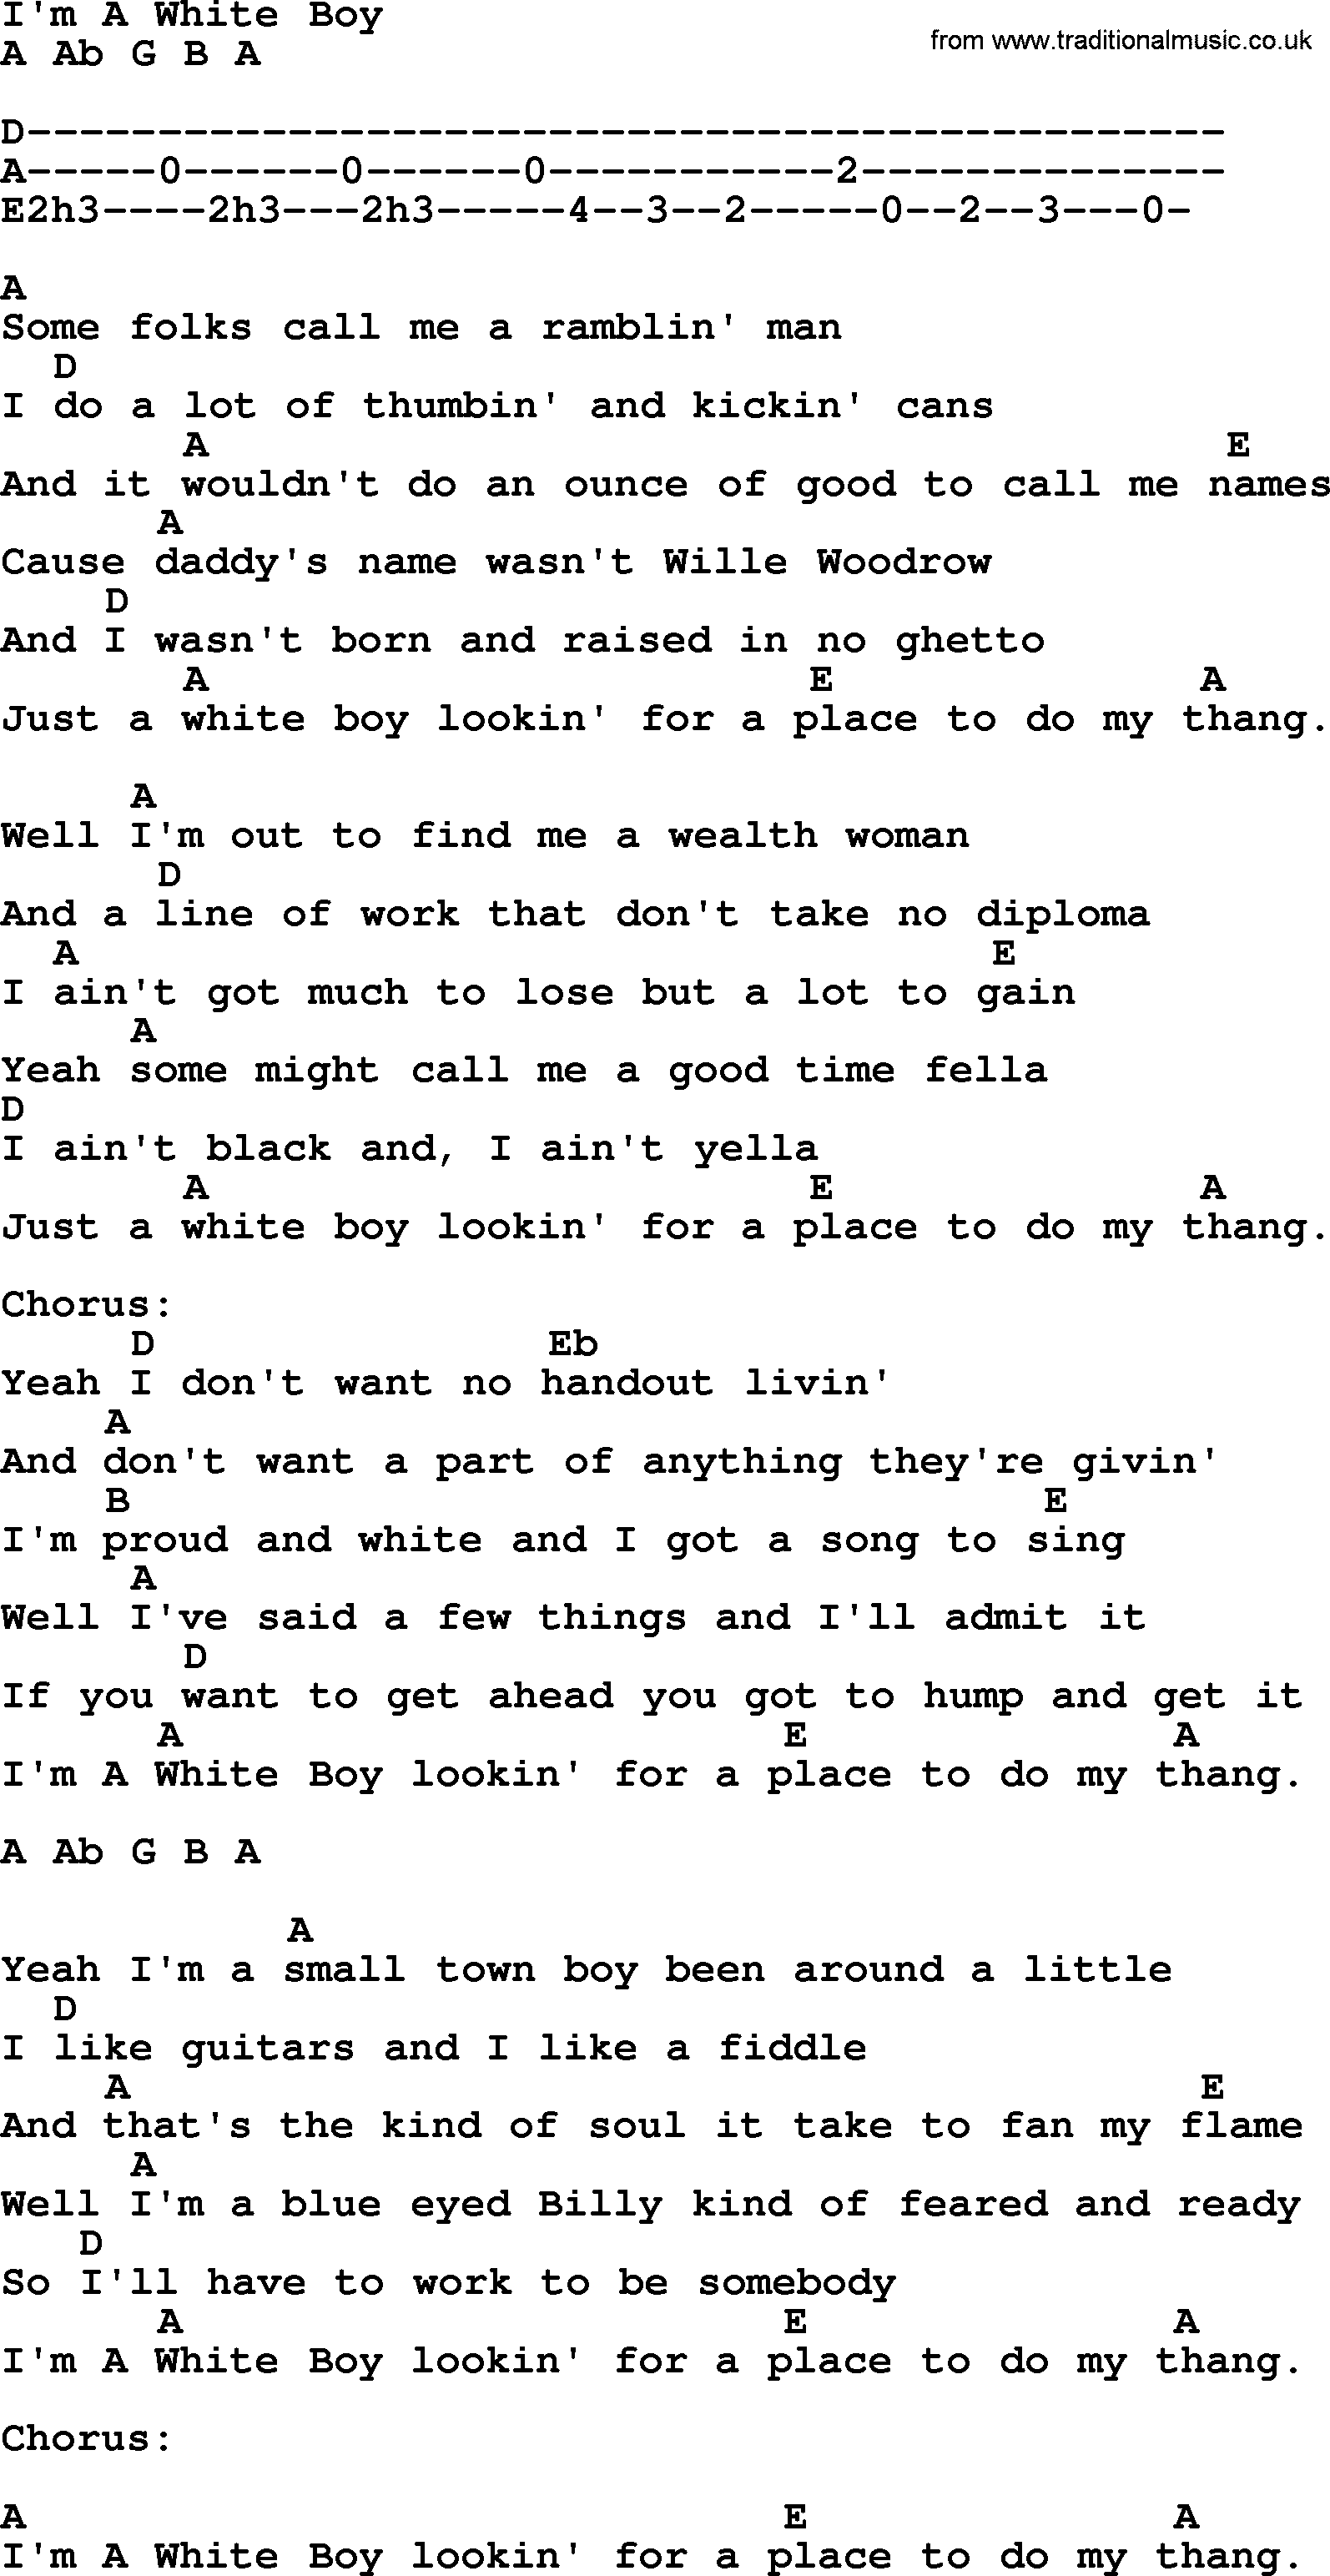 Merle Haggard song: I'm A White Boy, lyrics and chords